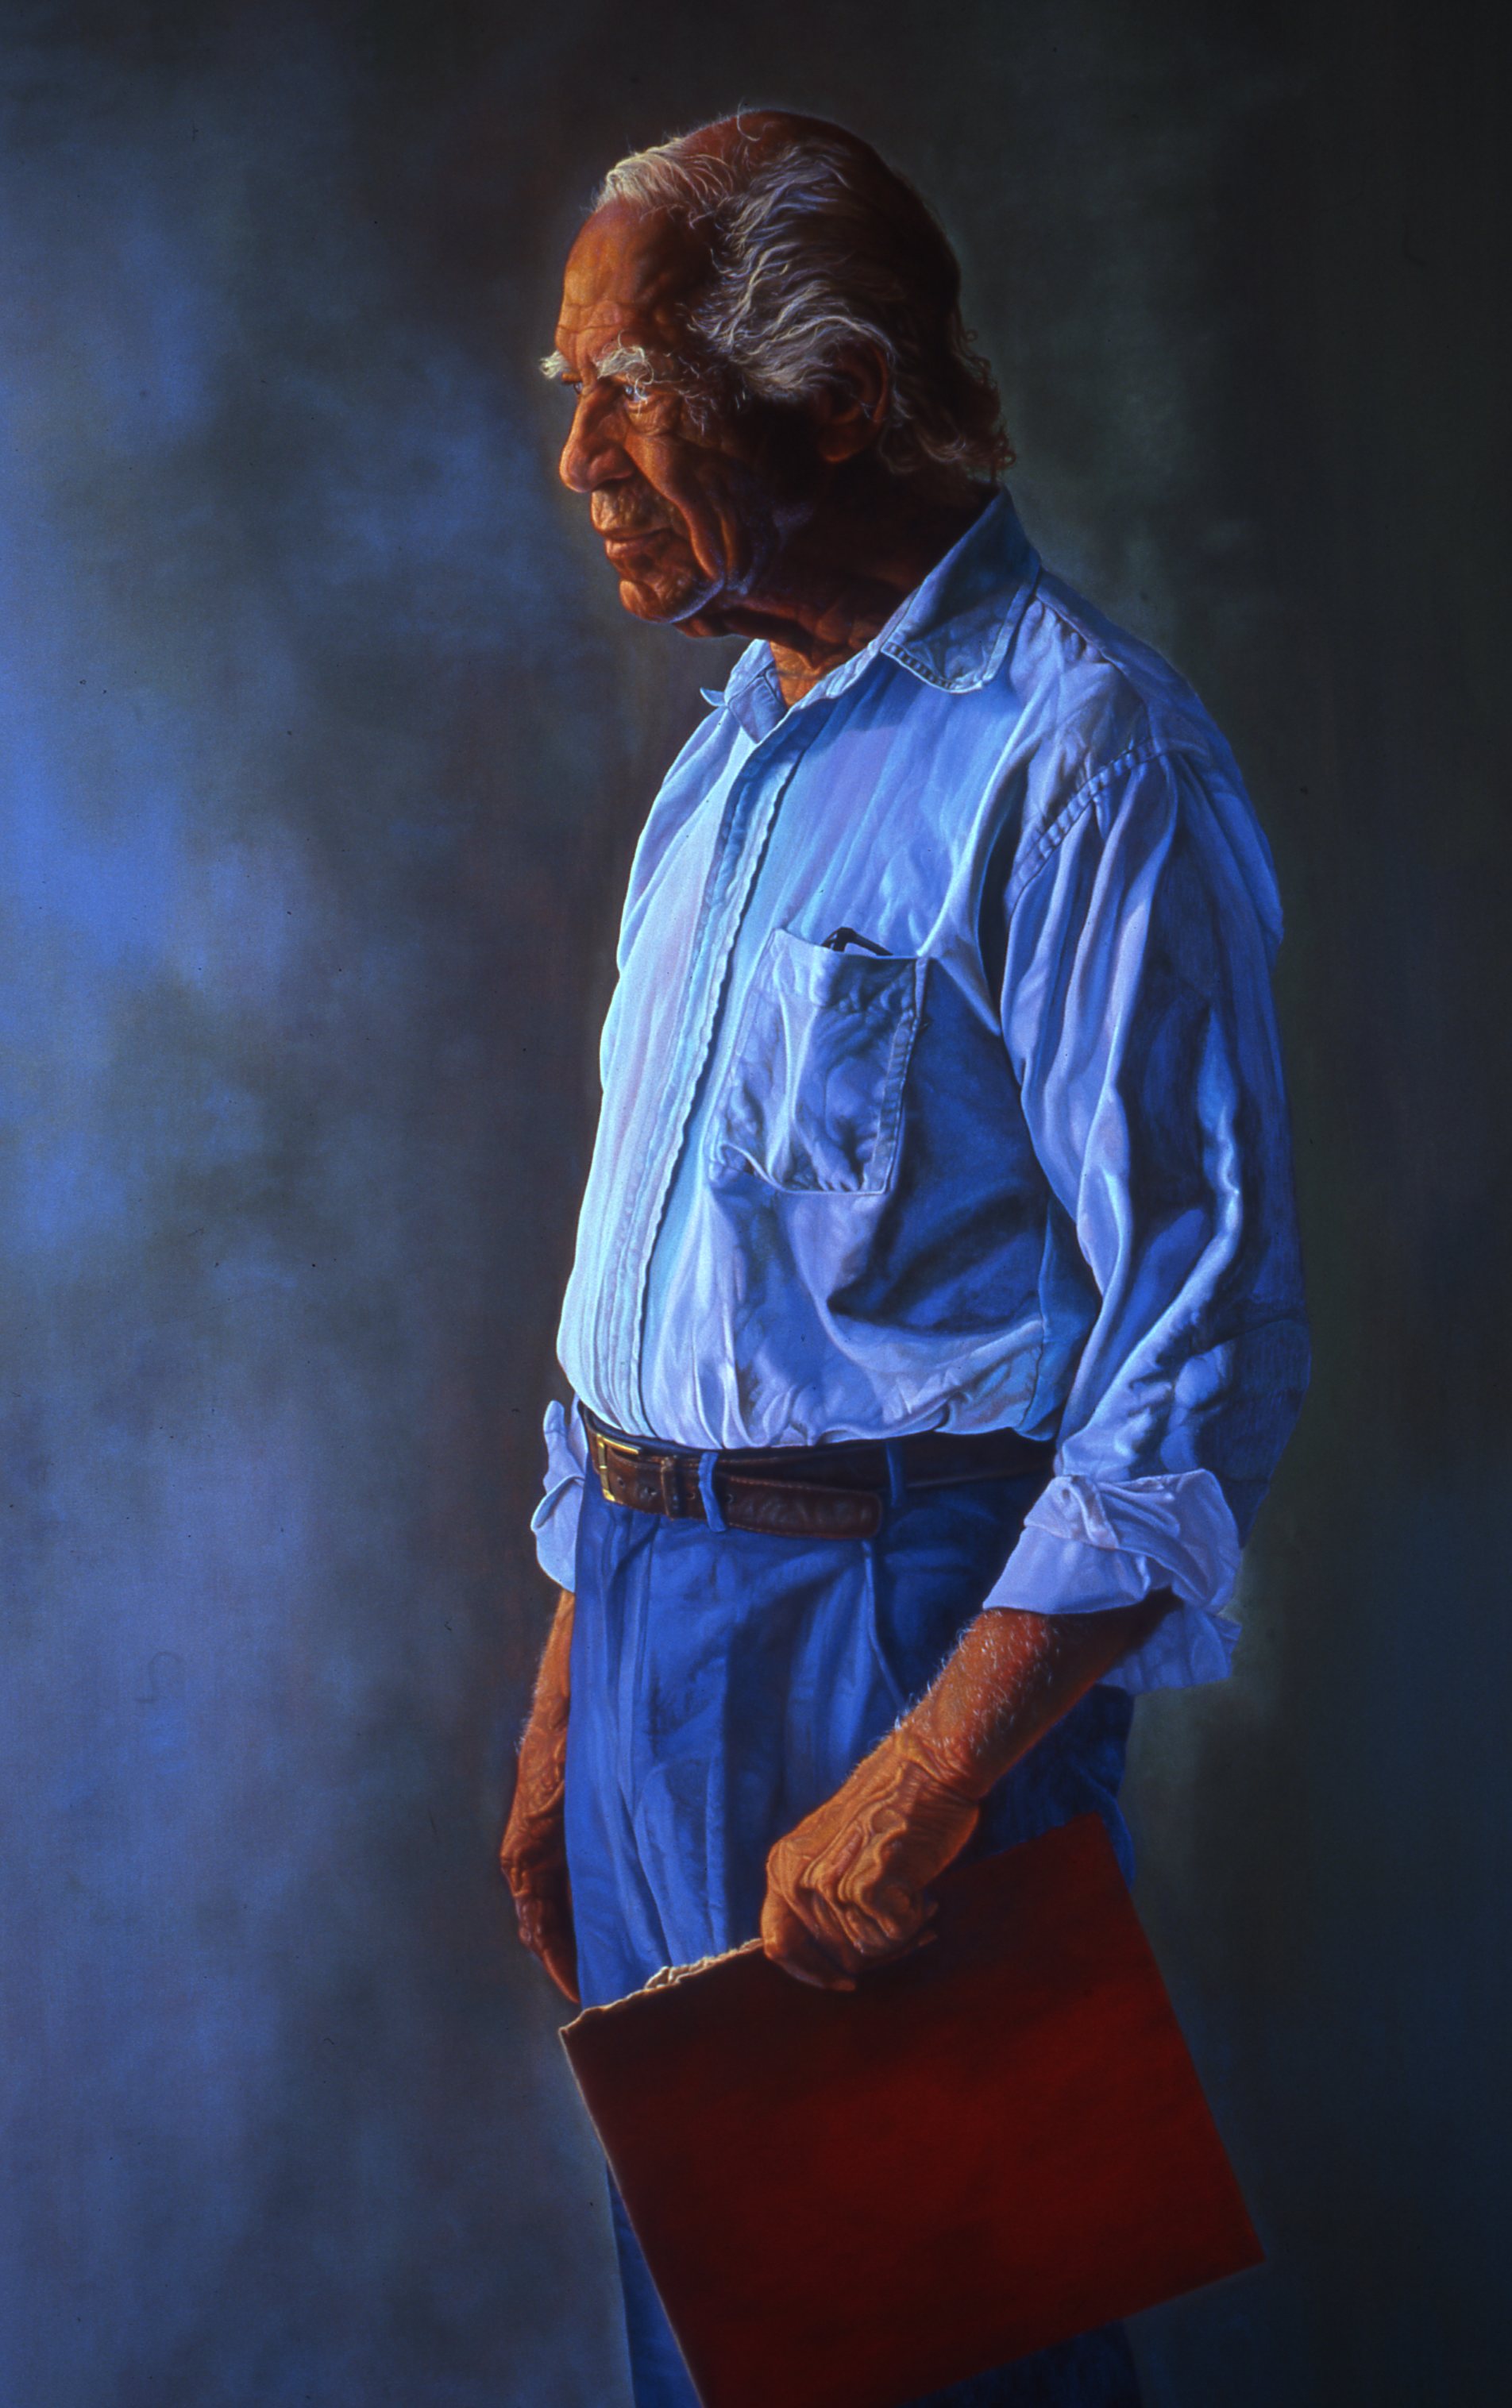   “The Activist”&nbsp;    2005 Oil on canvas   60 x 48 inches   © Richard Wyatt Jr.  